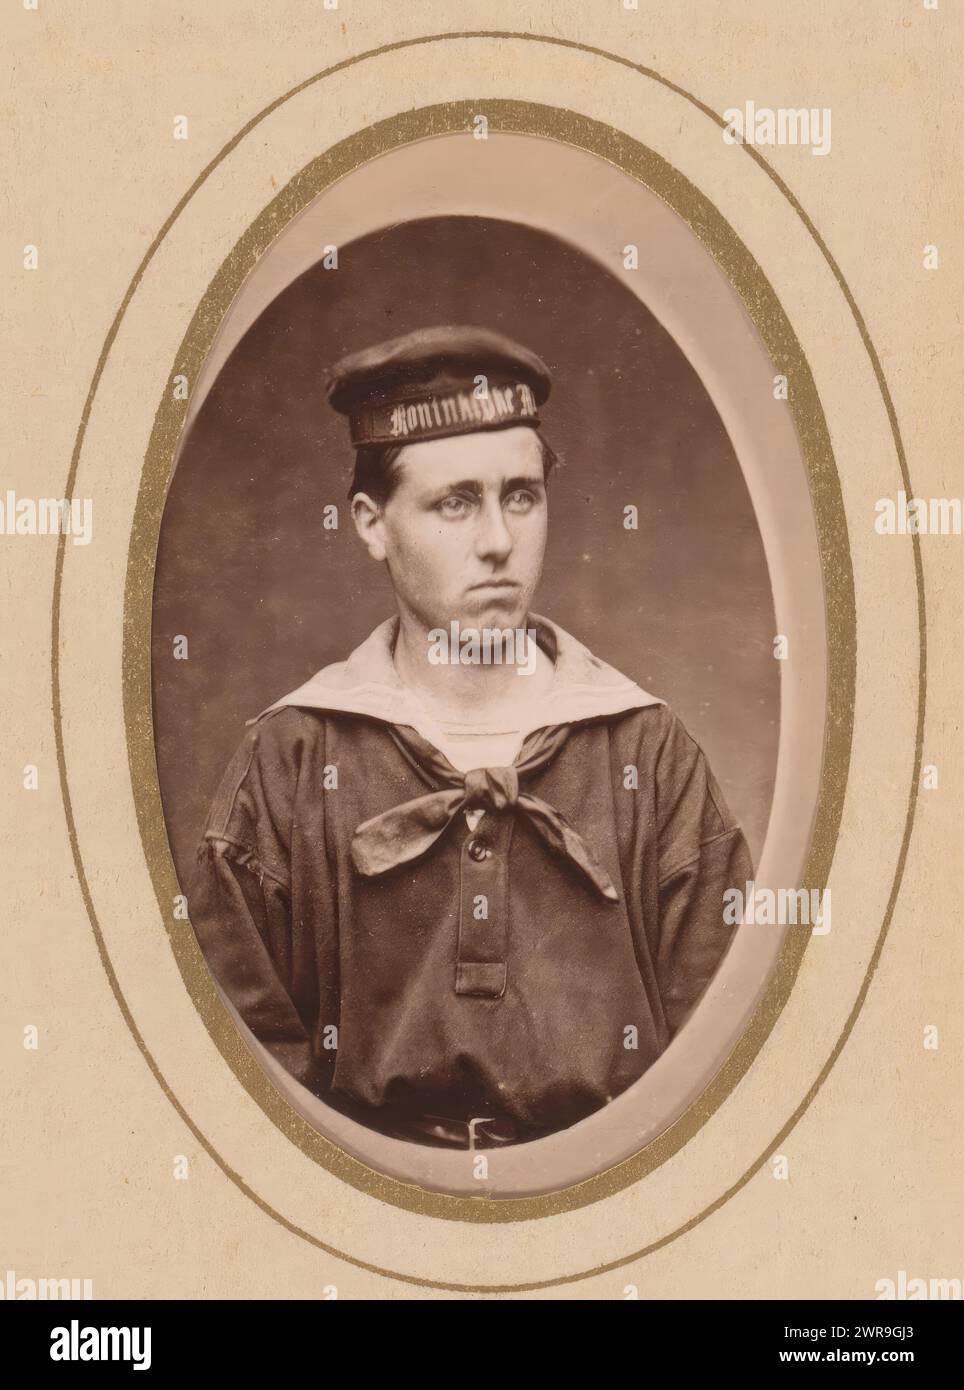 Portrait of a young man in uniform, This photo is part of an album., P. Vlaanderen & C. van der Aa, Noord-Holland, 1881 - 1900, photographic support, albumen print, height 82 mm × width 51 mm, photograph Stock Photo